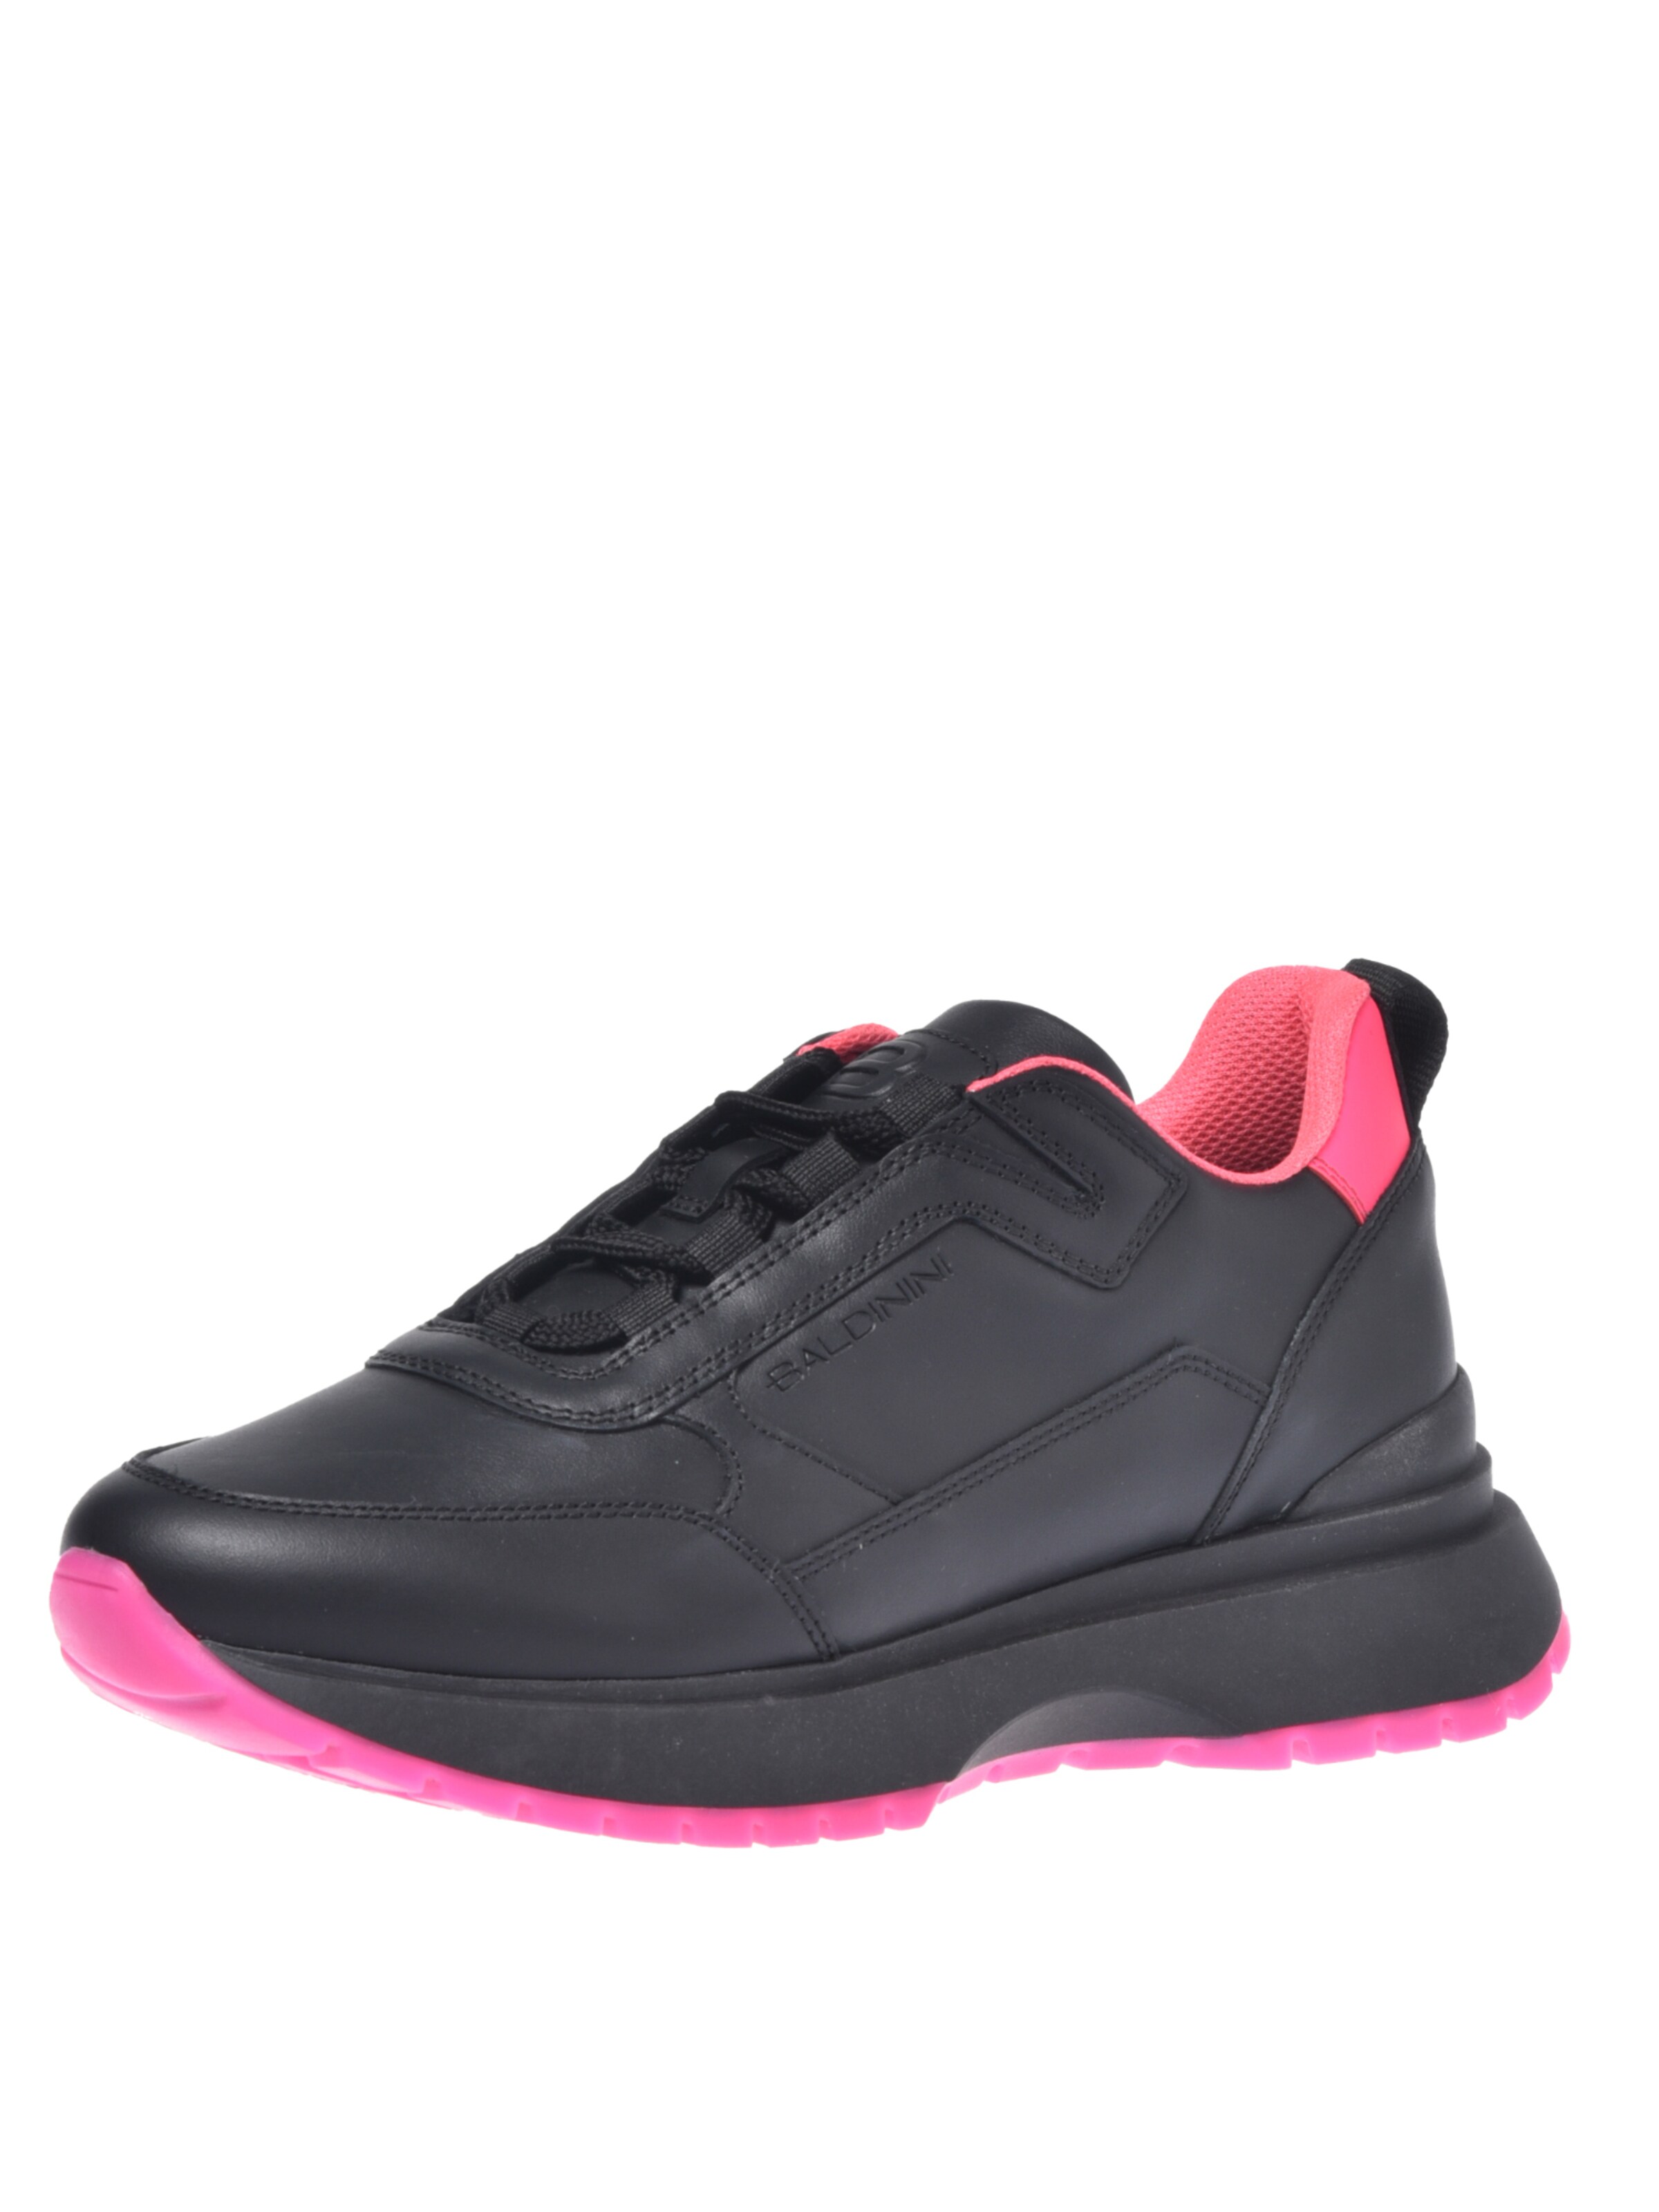 iKRIX-baldinini-trainers-polished-leather-sneakers-00000114704f00s013.jpg